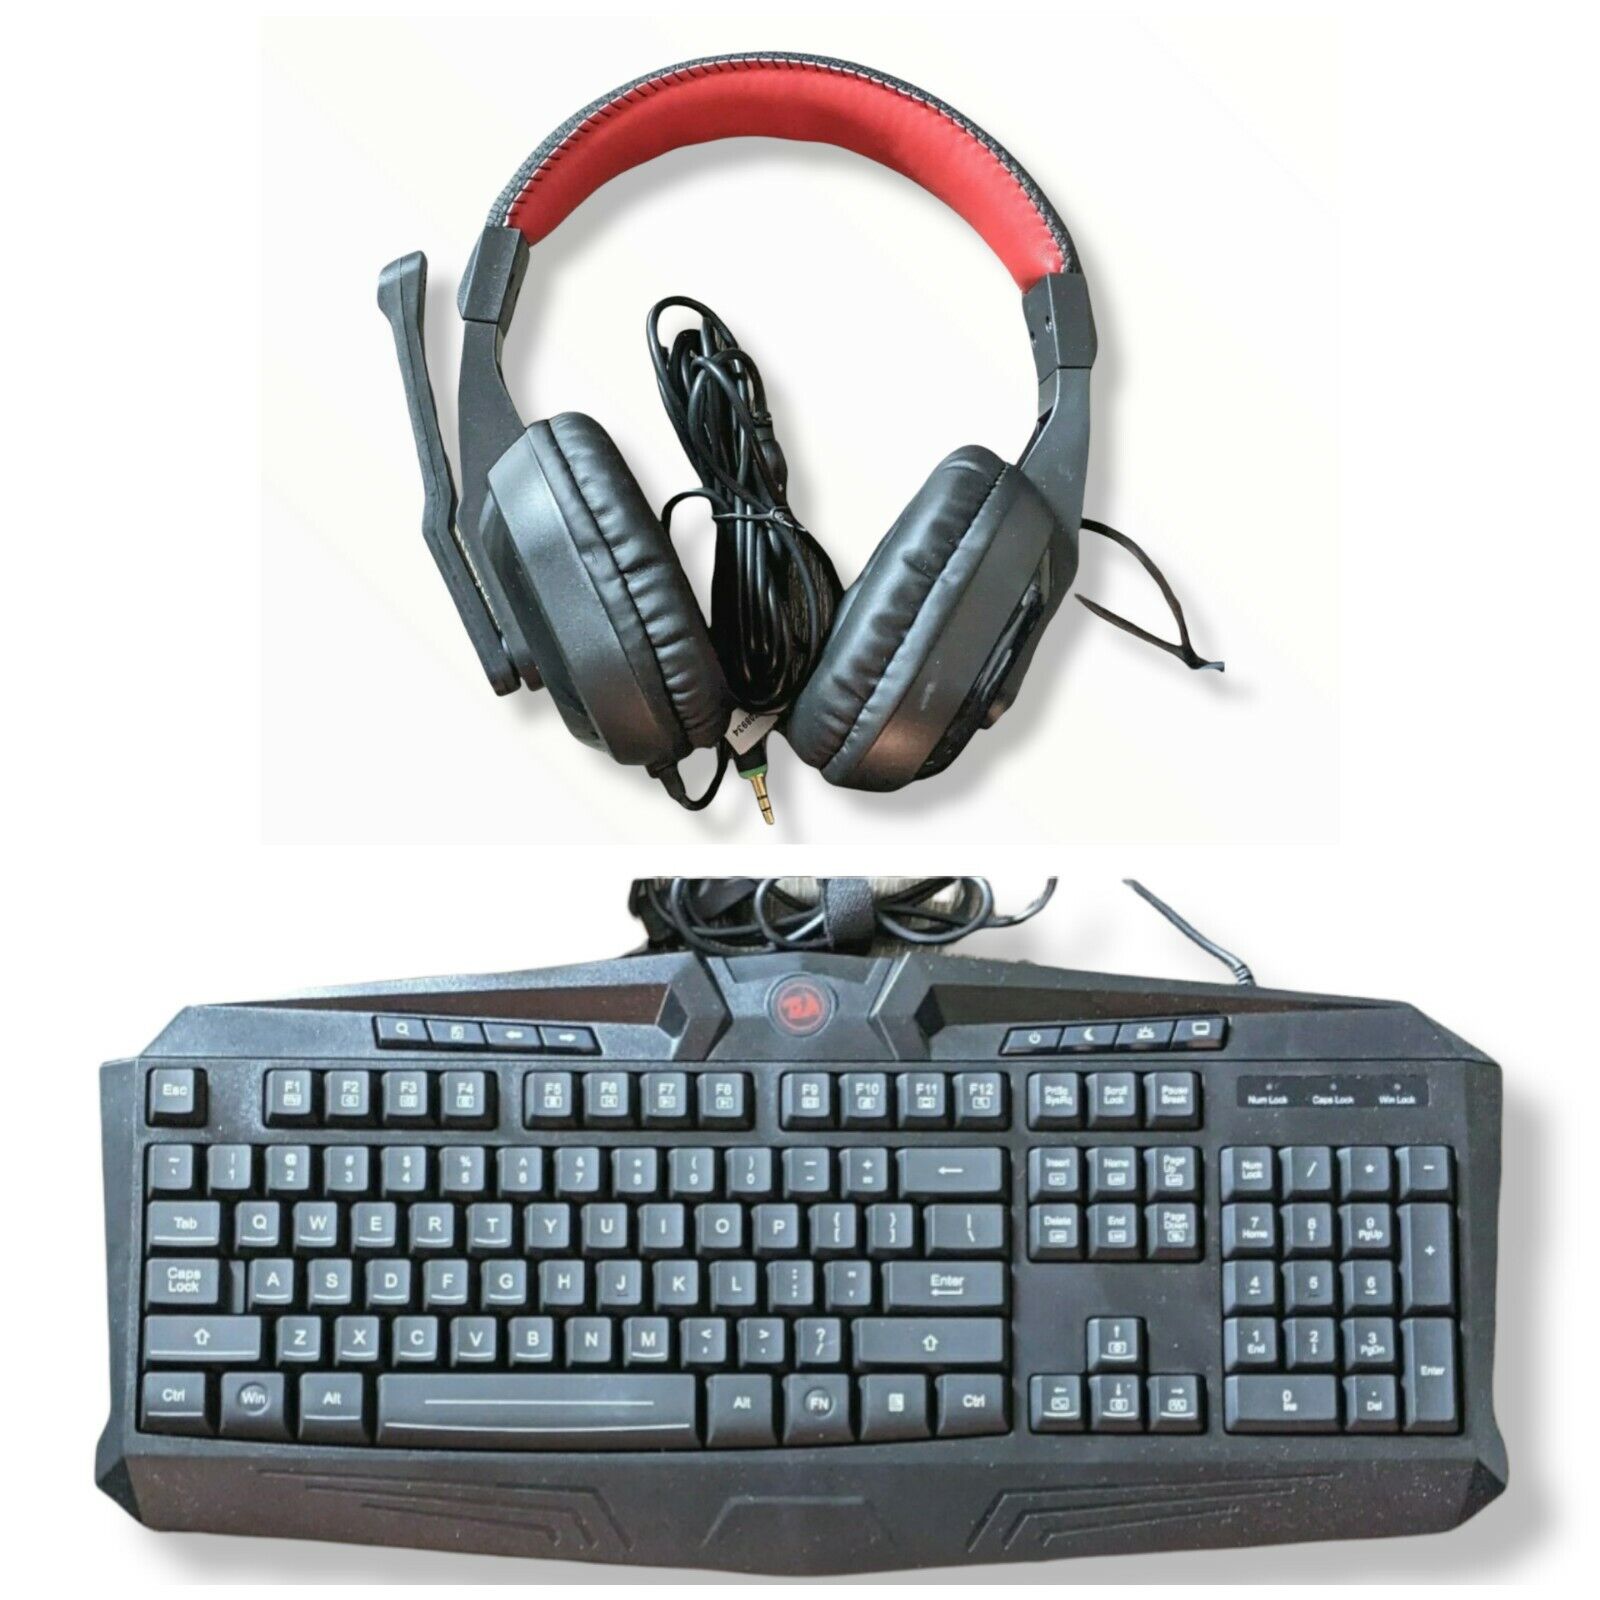 Redragon Gaming Headphones & Keyboard Combo RGB Backlight Wired S101 Black